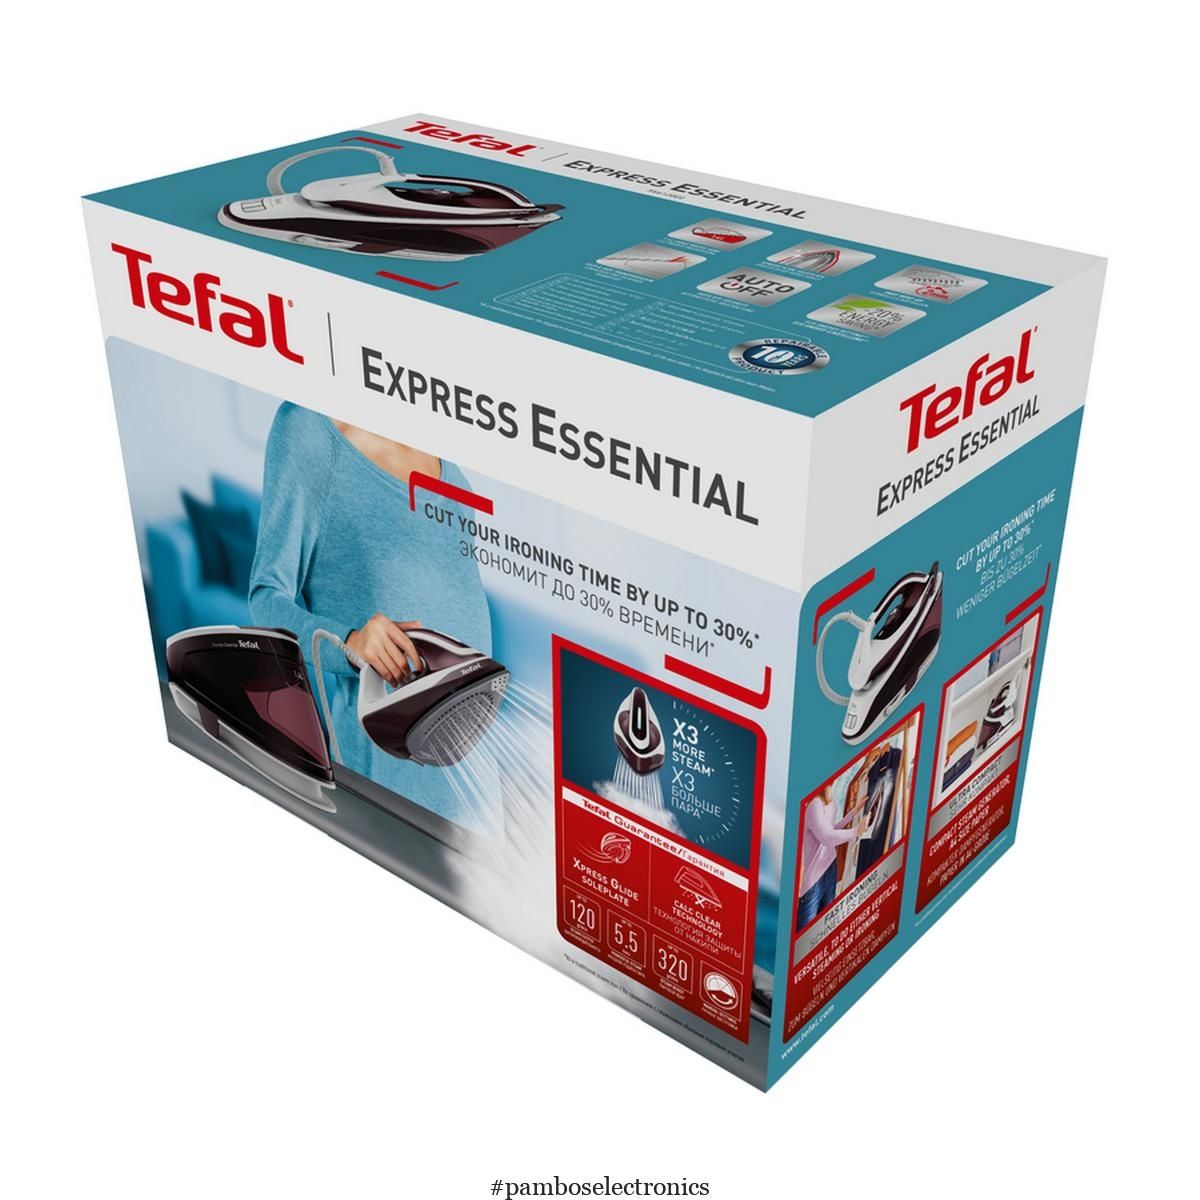 Tefal express essential sv6120e0. Tefal Express Essential sv6120. Tefal Express Essential sv6120 цены. Тефаль SV 6120 инструкция по применению. Парогенератор Tefal sv6120e0.